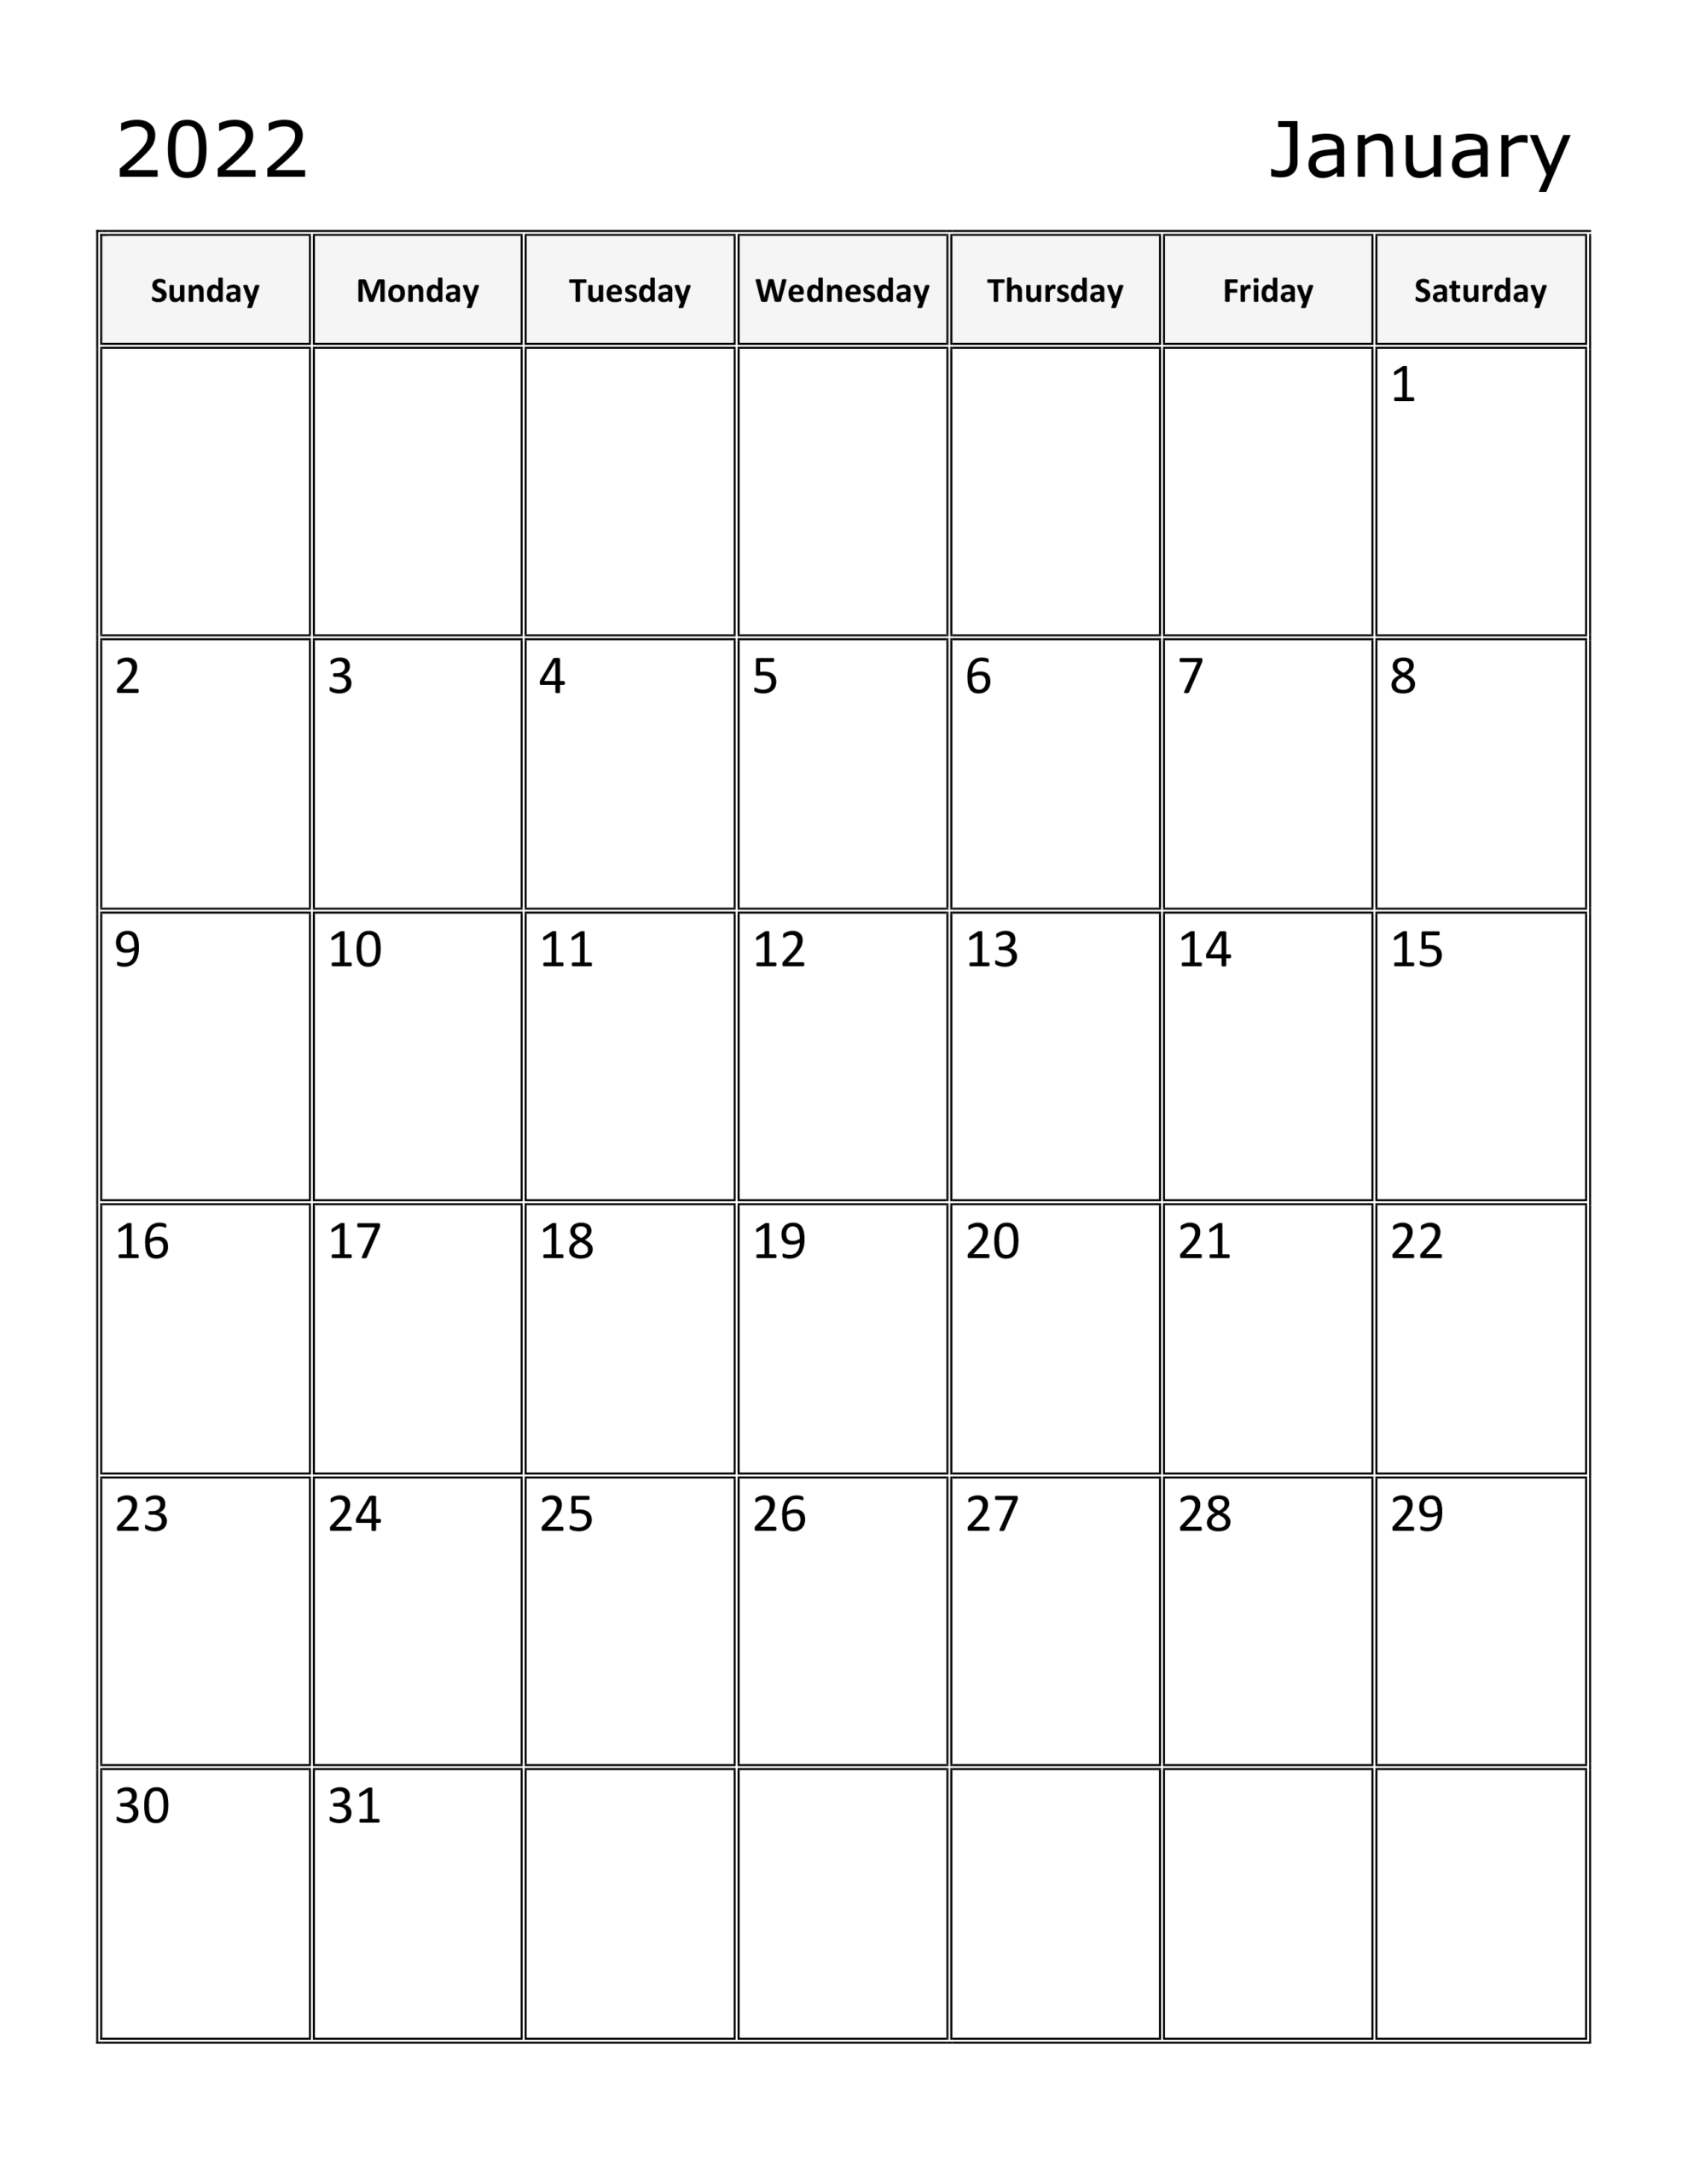 Get Calendar 2022 January